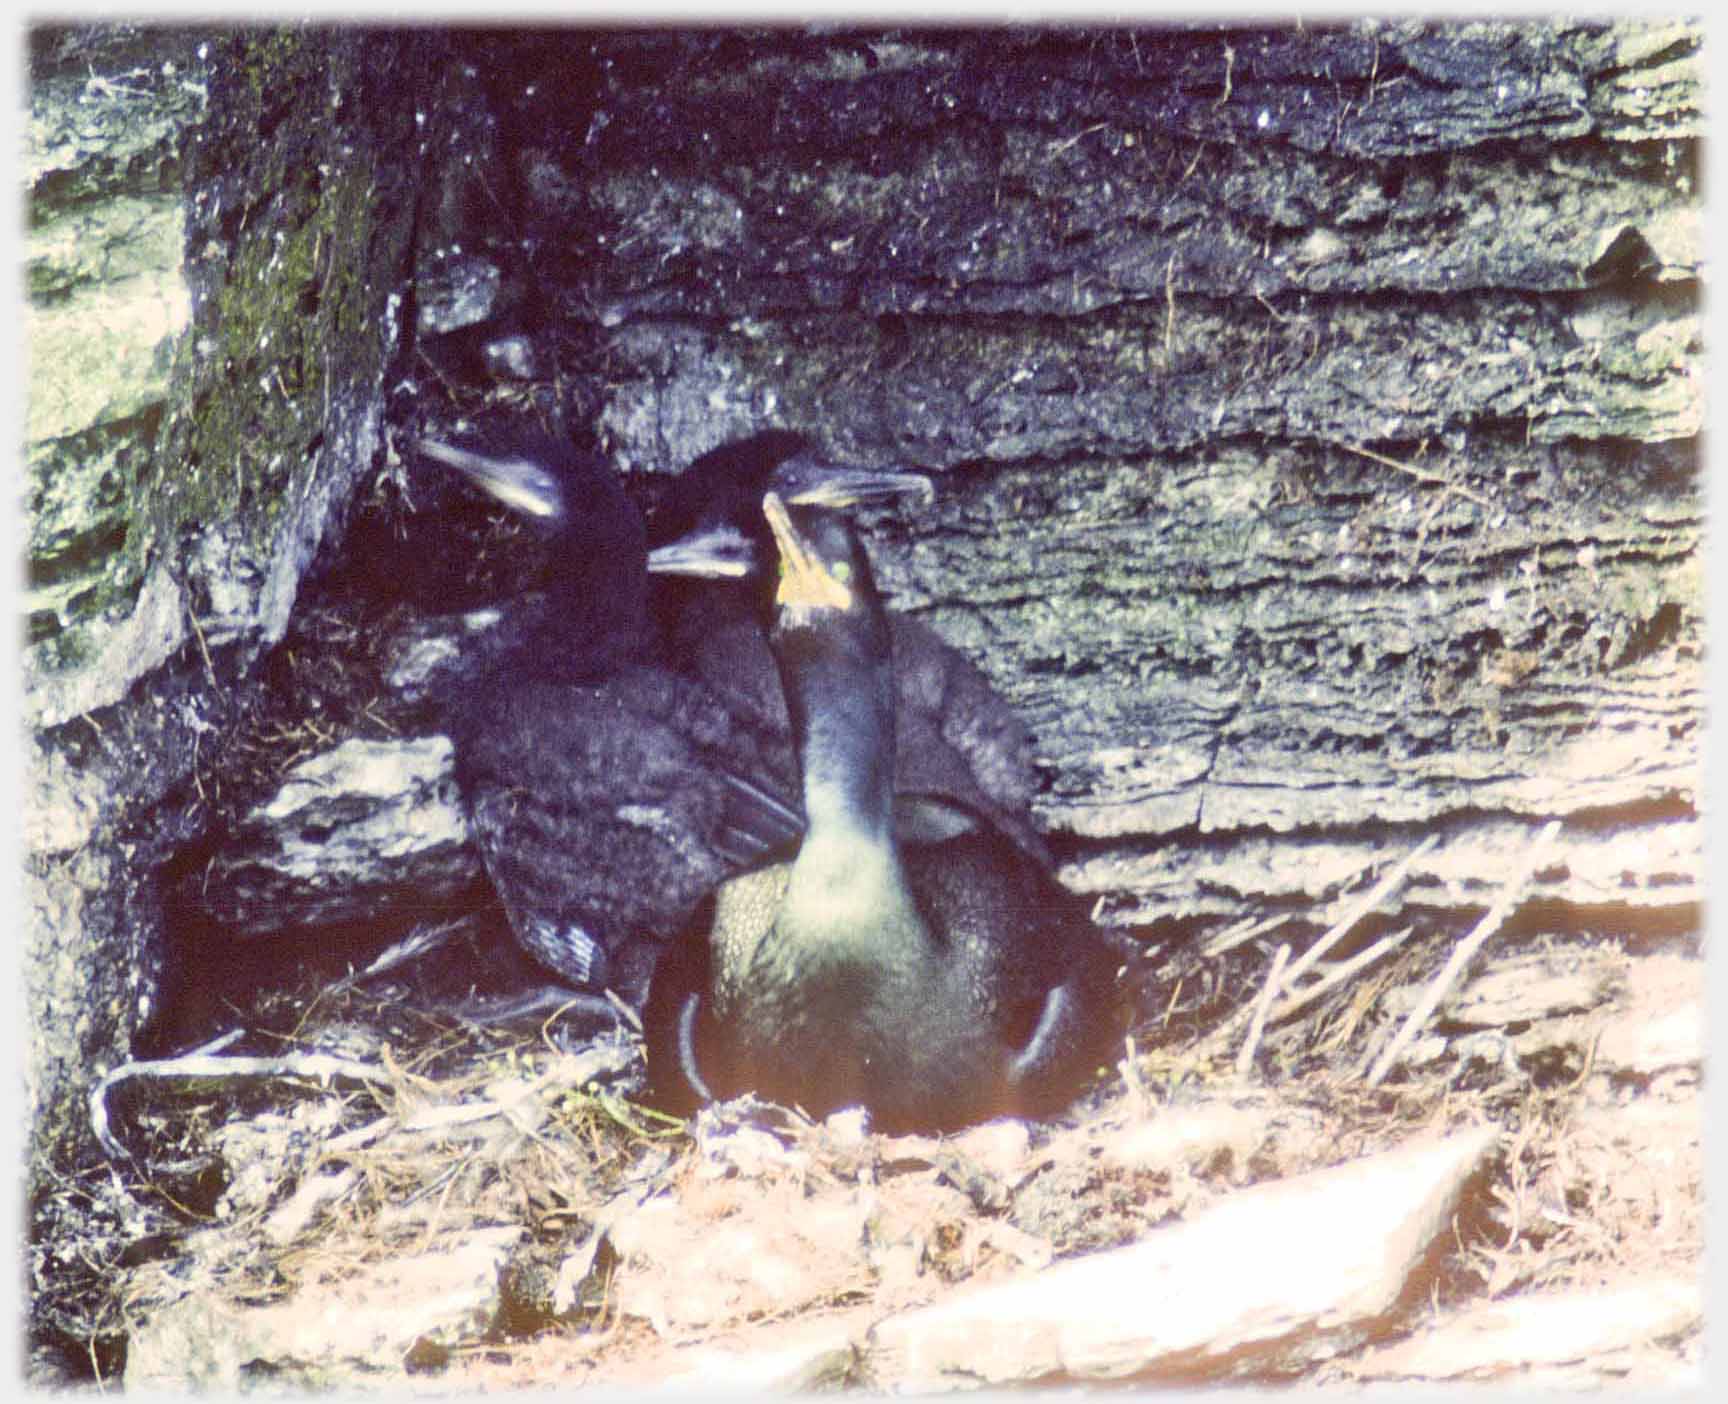 Shag raising its head, three young beaks behind.